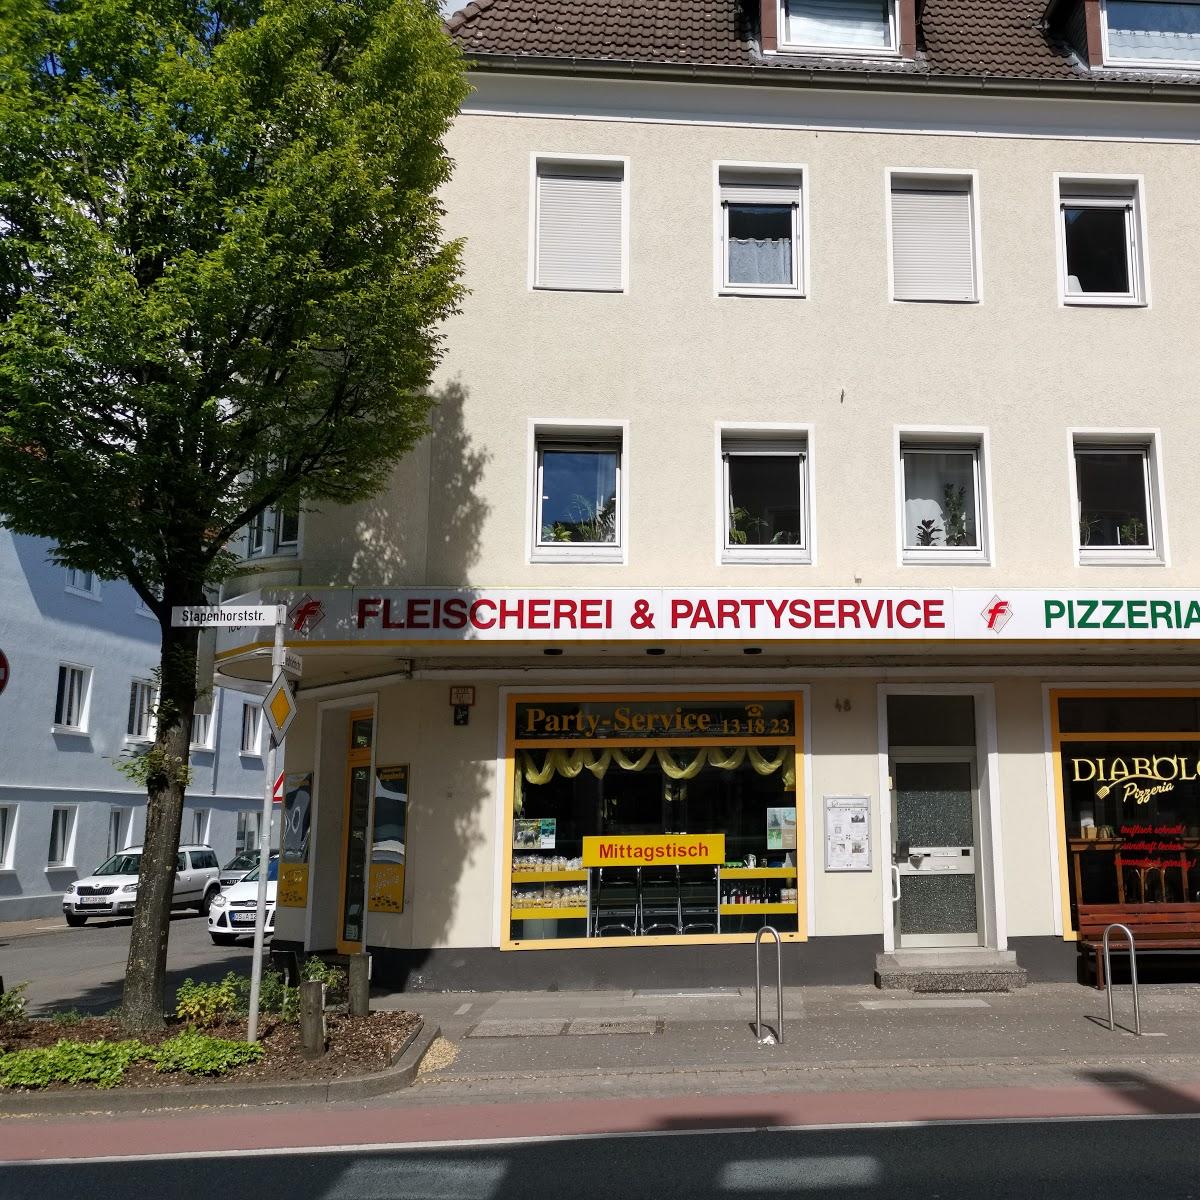 Restaurant "Pizzeria Diabolo" in Bielefeld